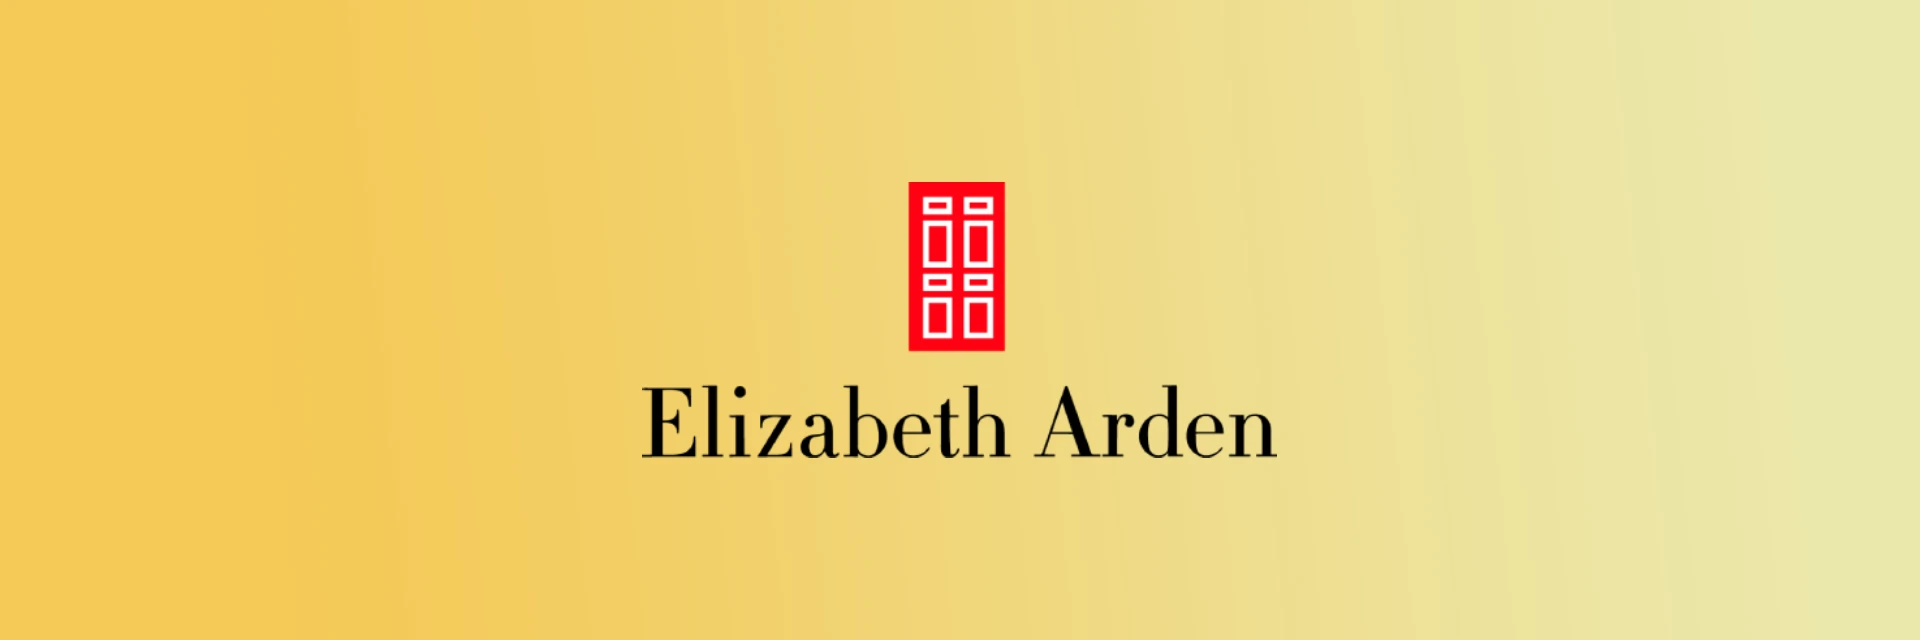 Image of Elizabeth Arden perfume brand logo